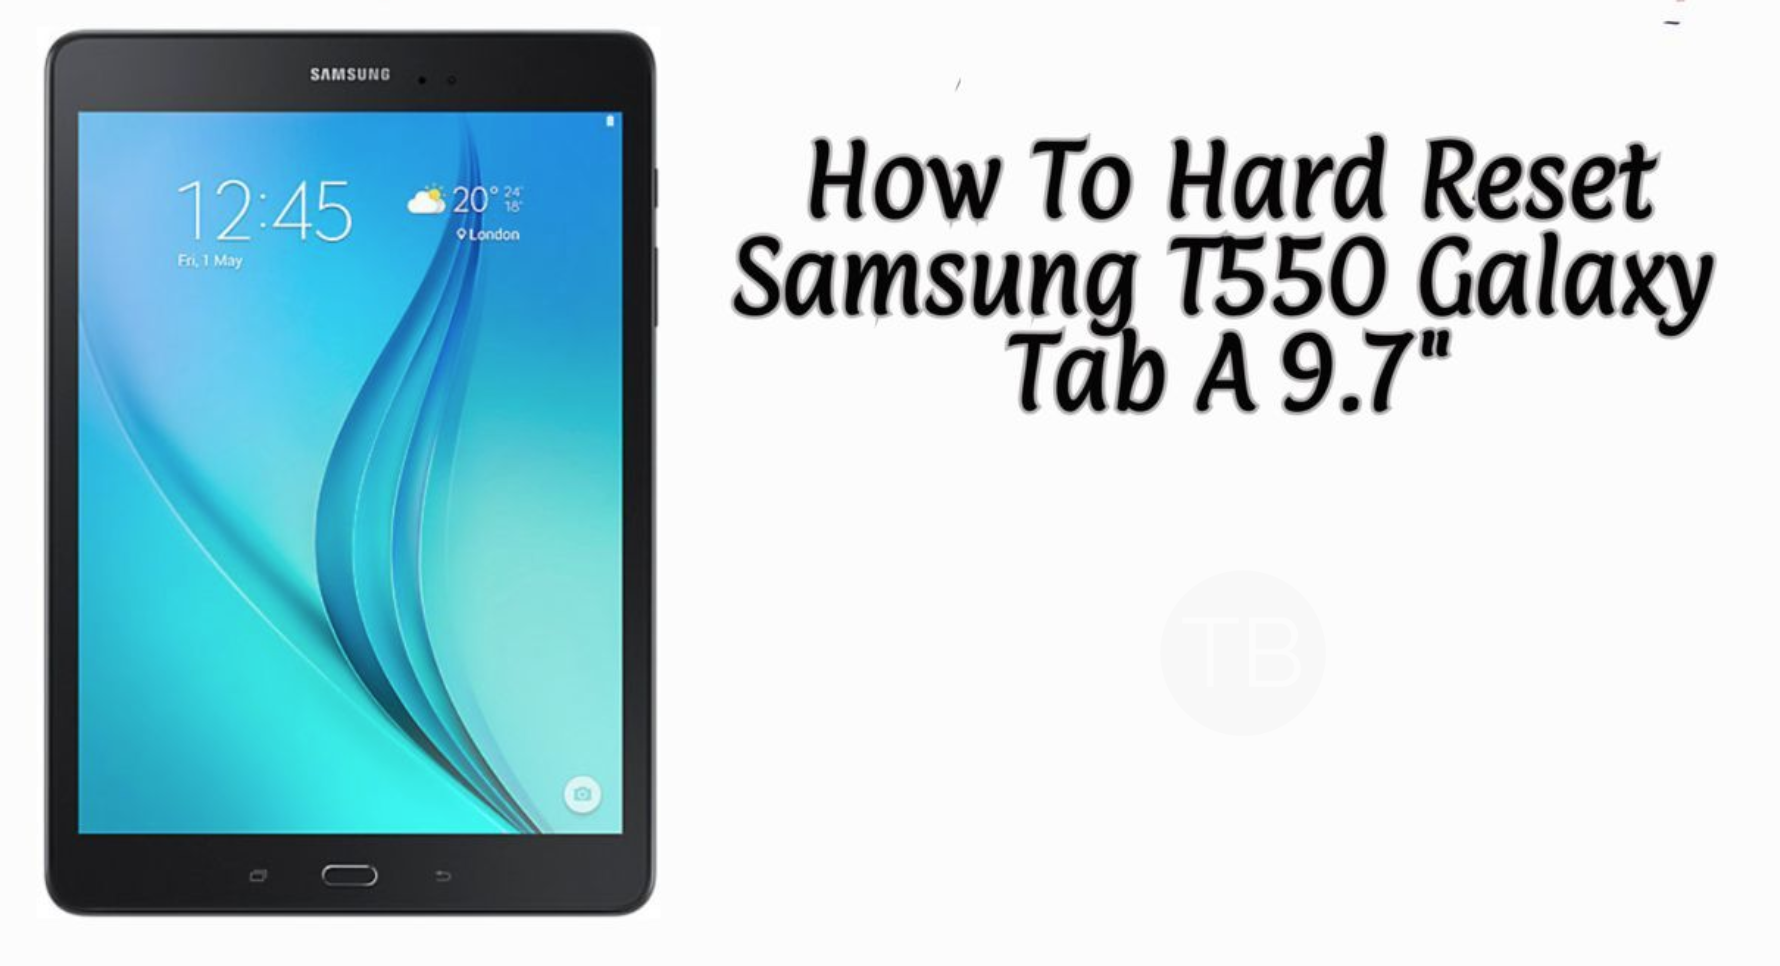 Hard Reset Samsung T550 Galaxy Tab A 9.7"